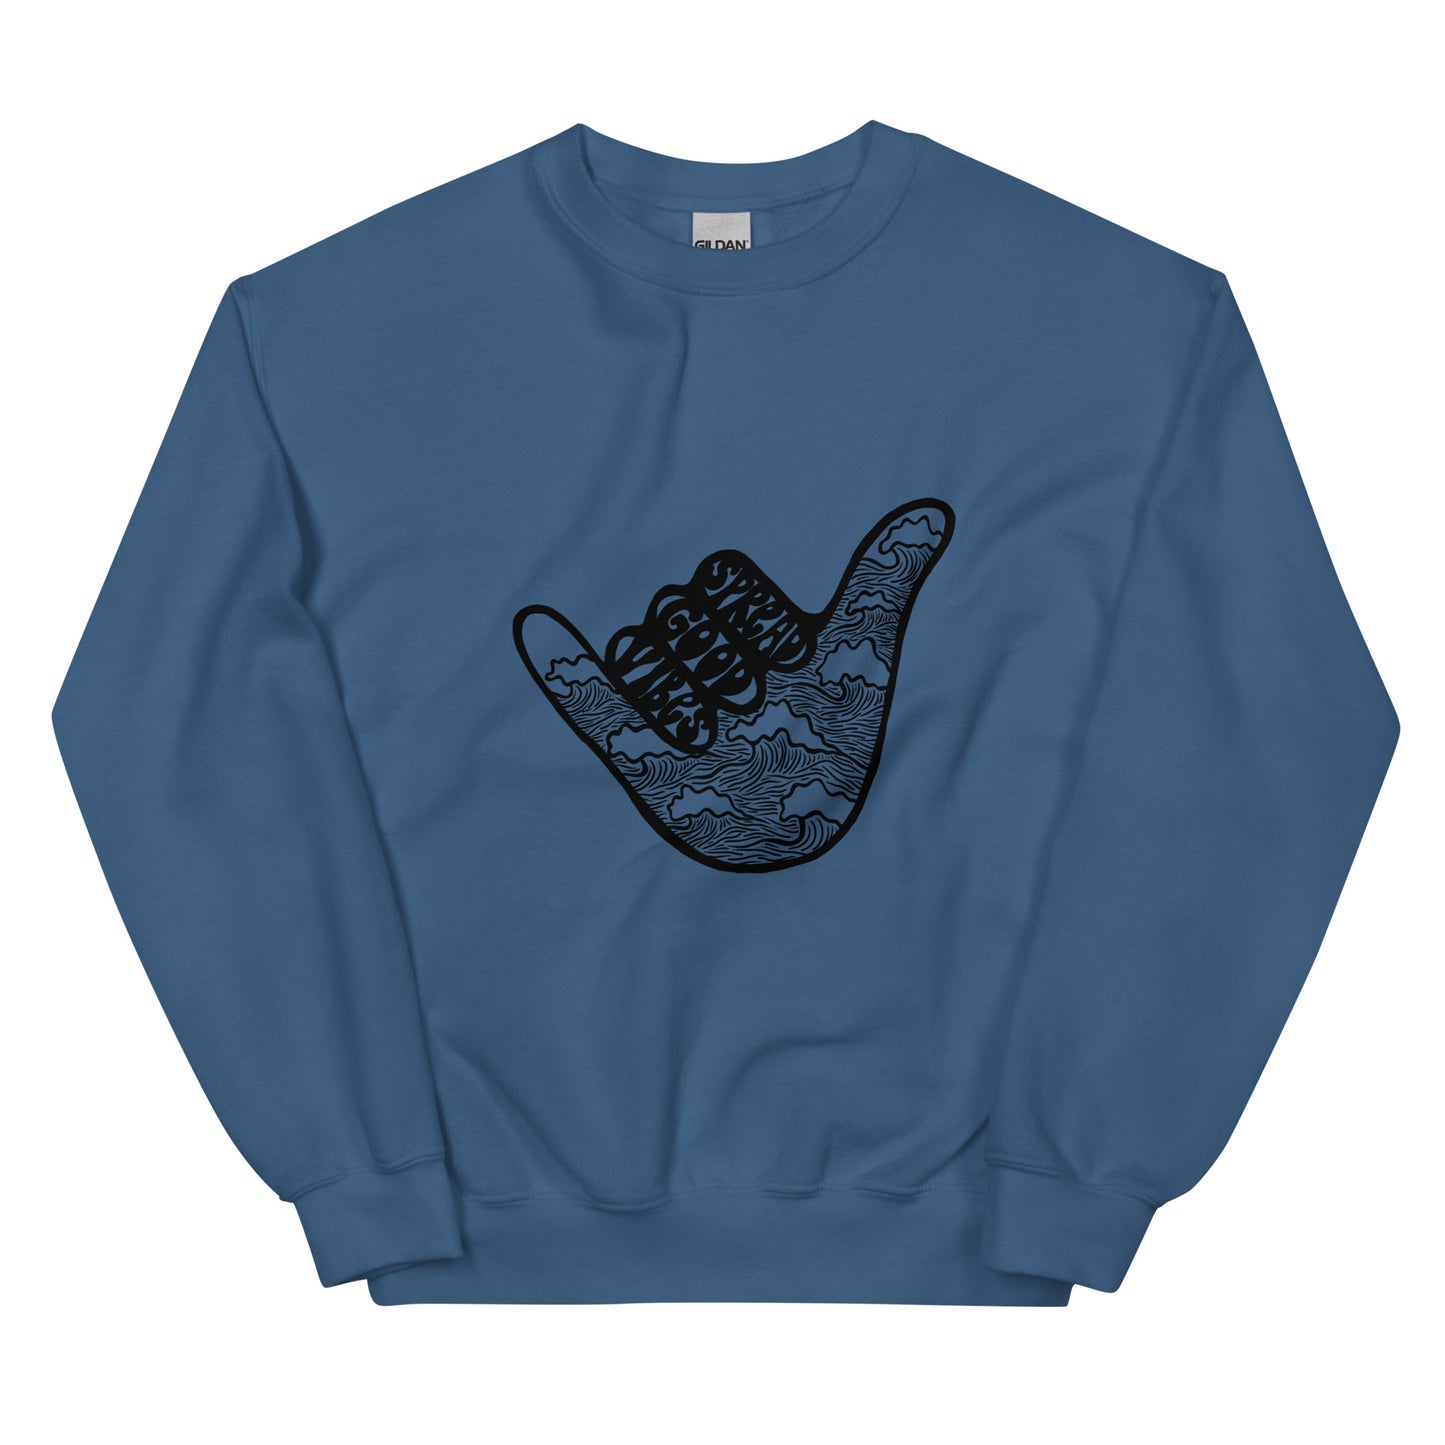 spread good vibes sweatshirt (design on front)